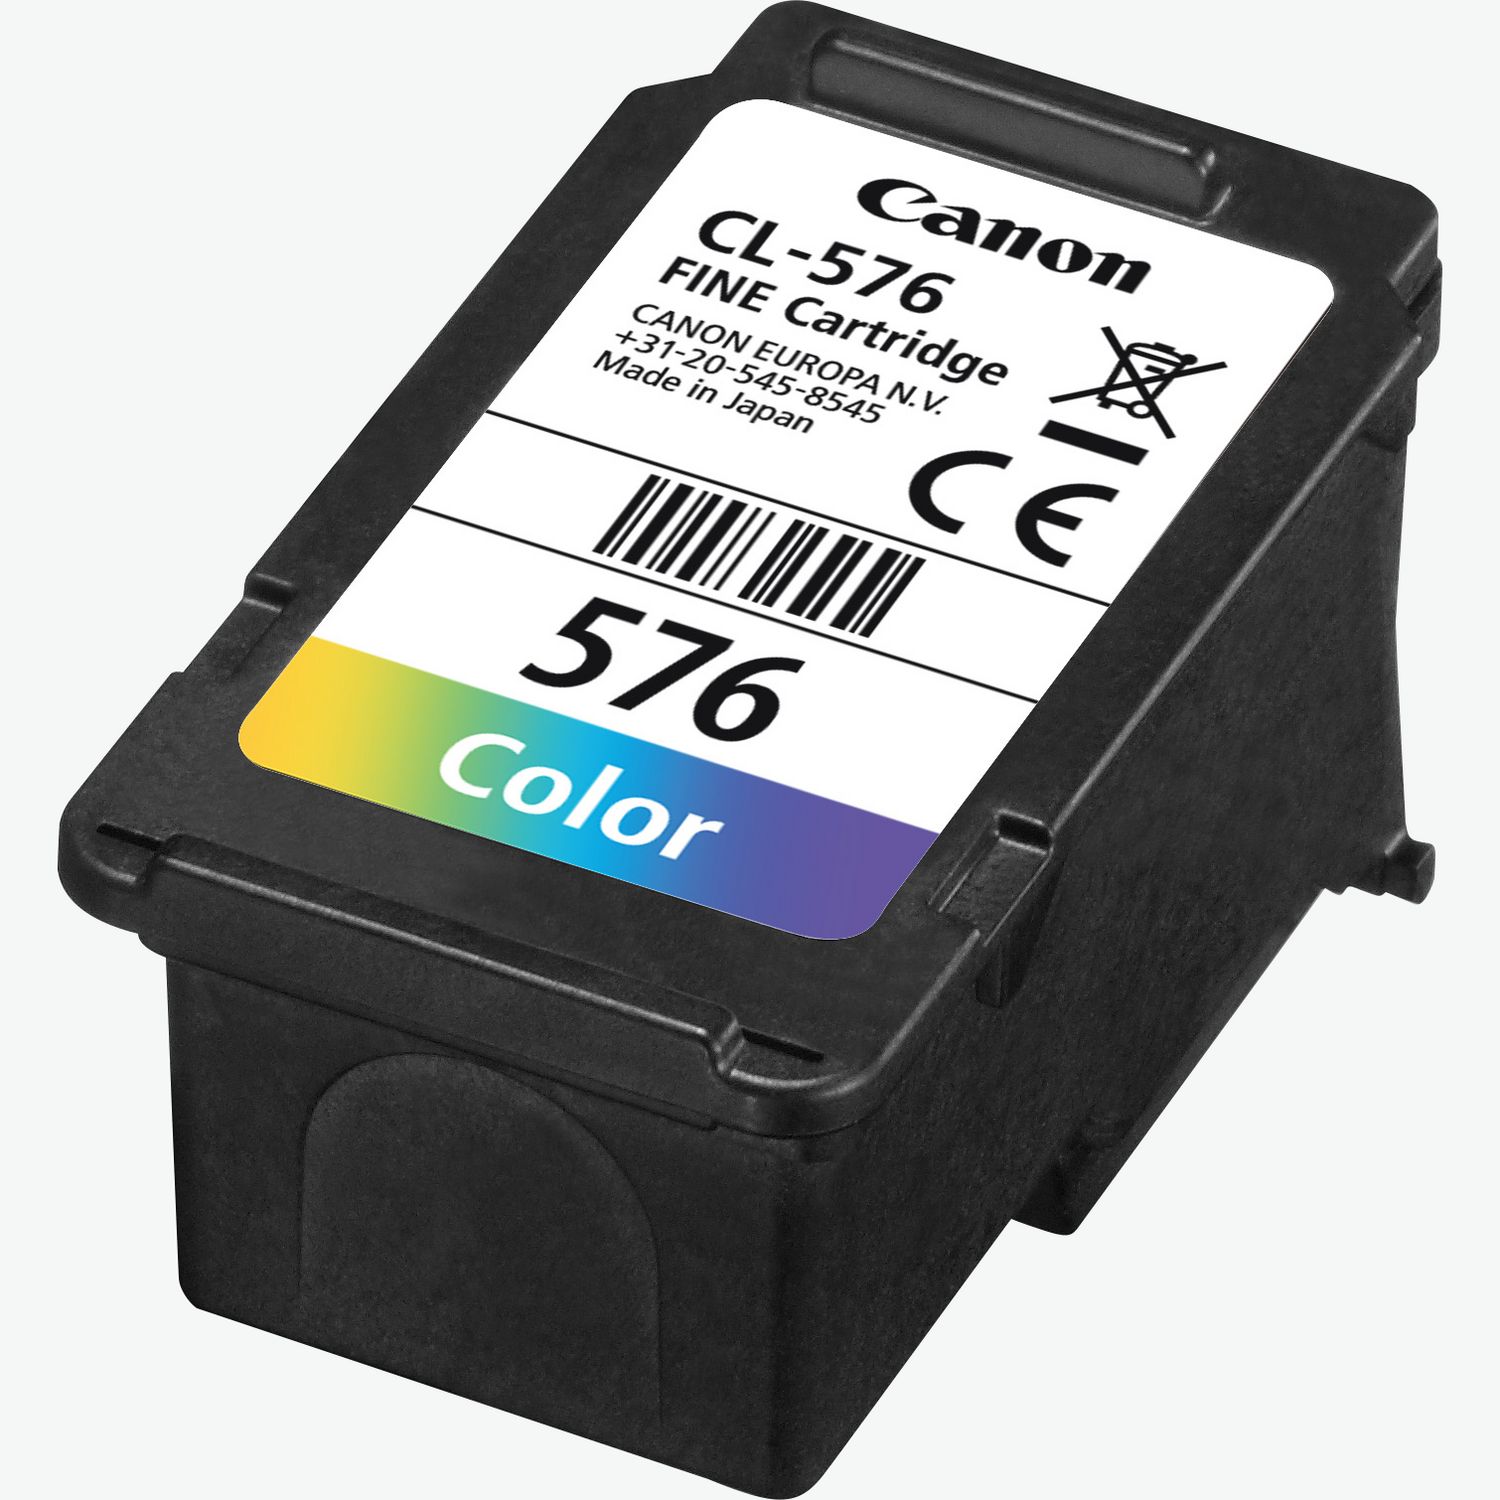 Canon Pixma TS3550i Impresora Multifunción 3 en 1, Sistema de